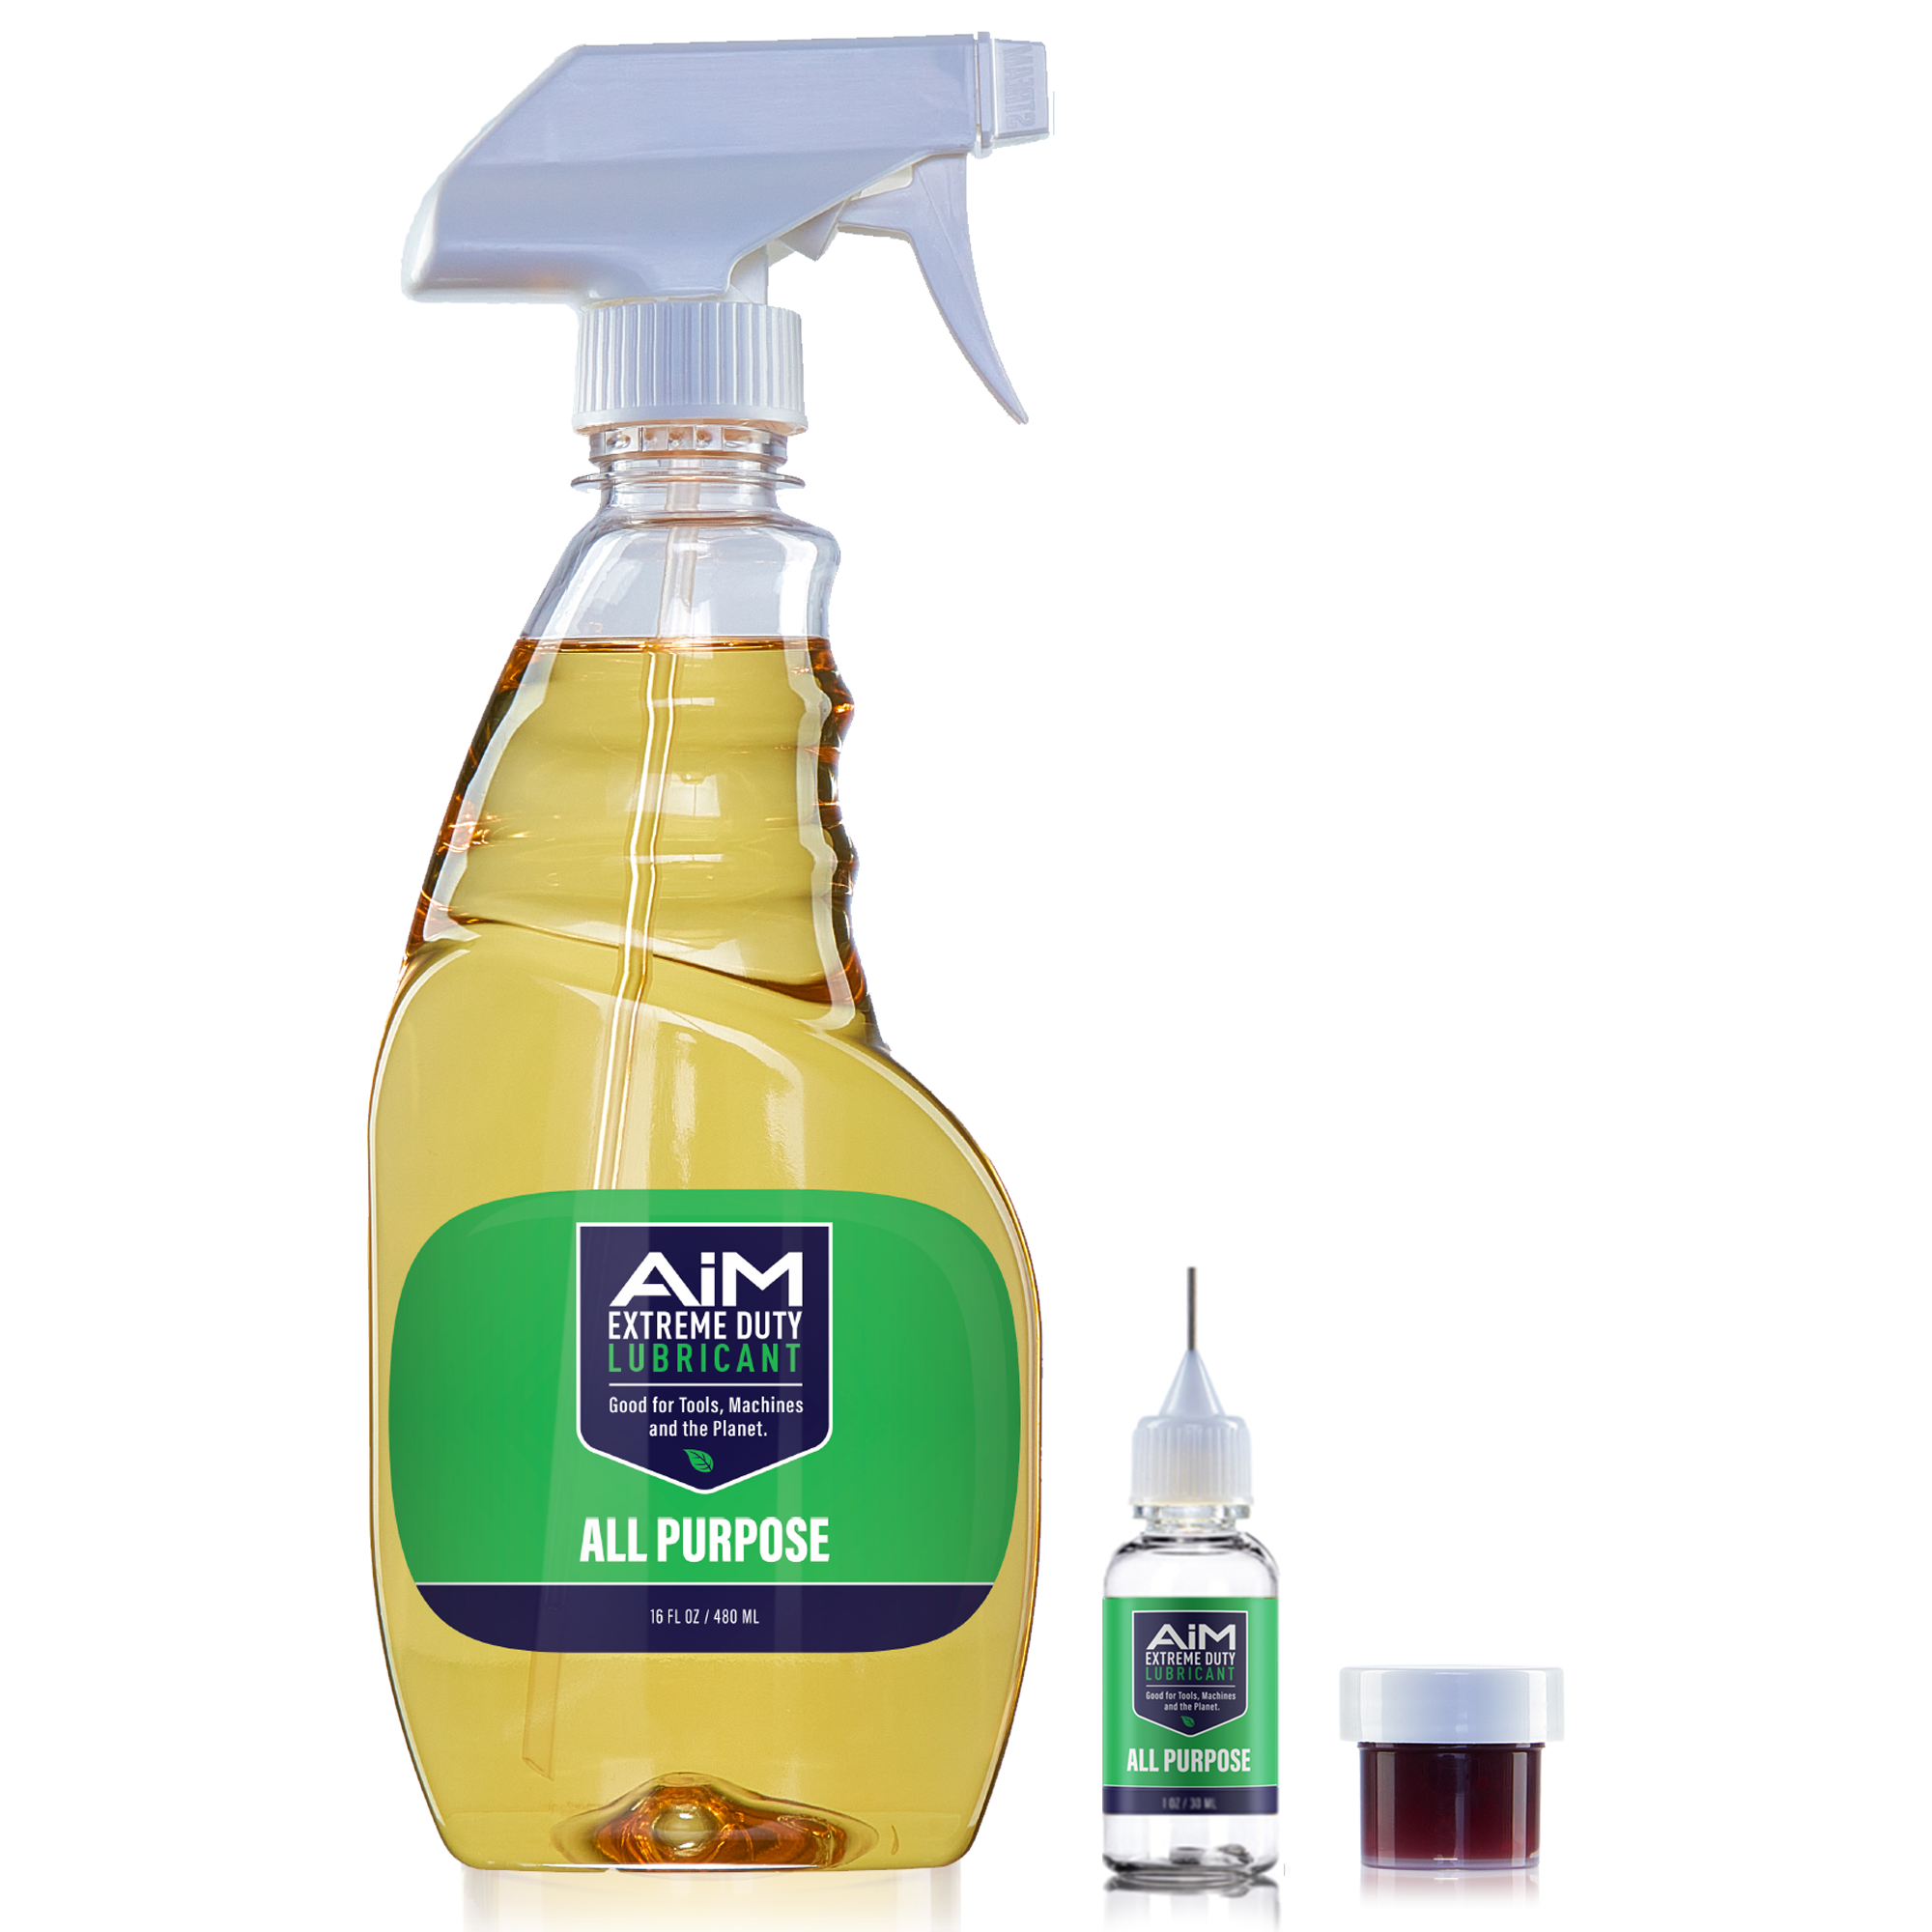 AiM Extreme Duty Lubricant | Exercise Equipment Lube | Medium Kit | 16 oz sprayer + 0.25 oz grease + precision bottle